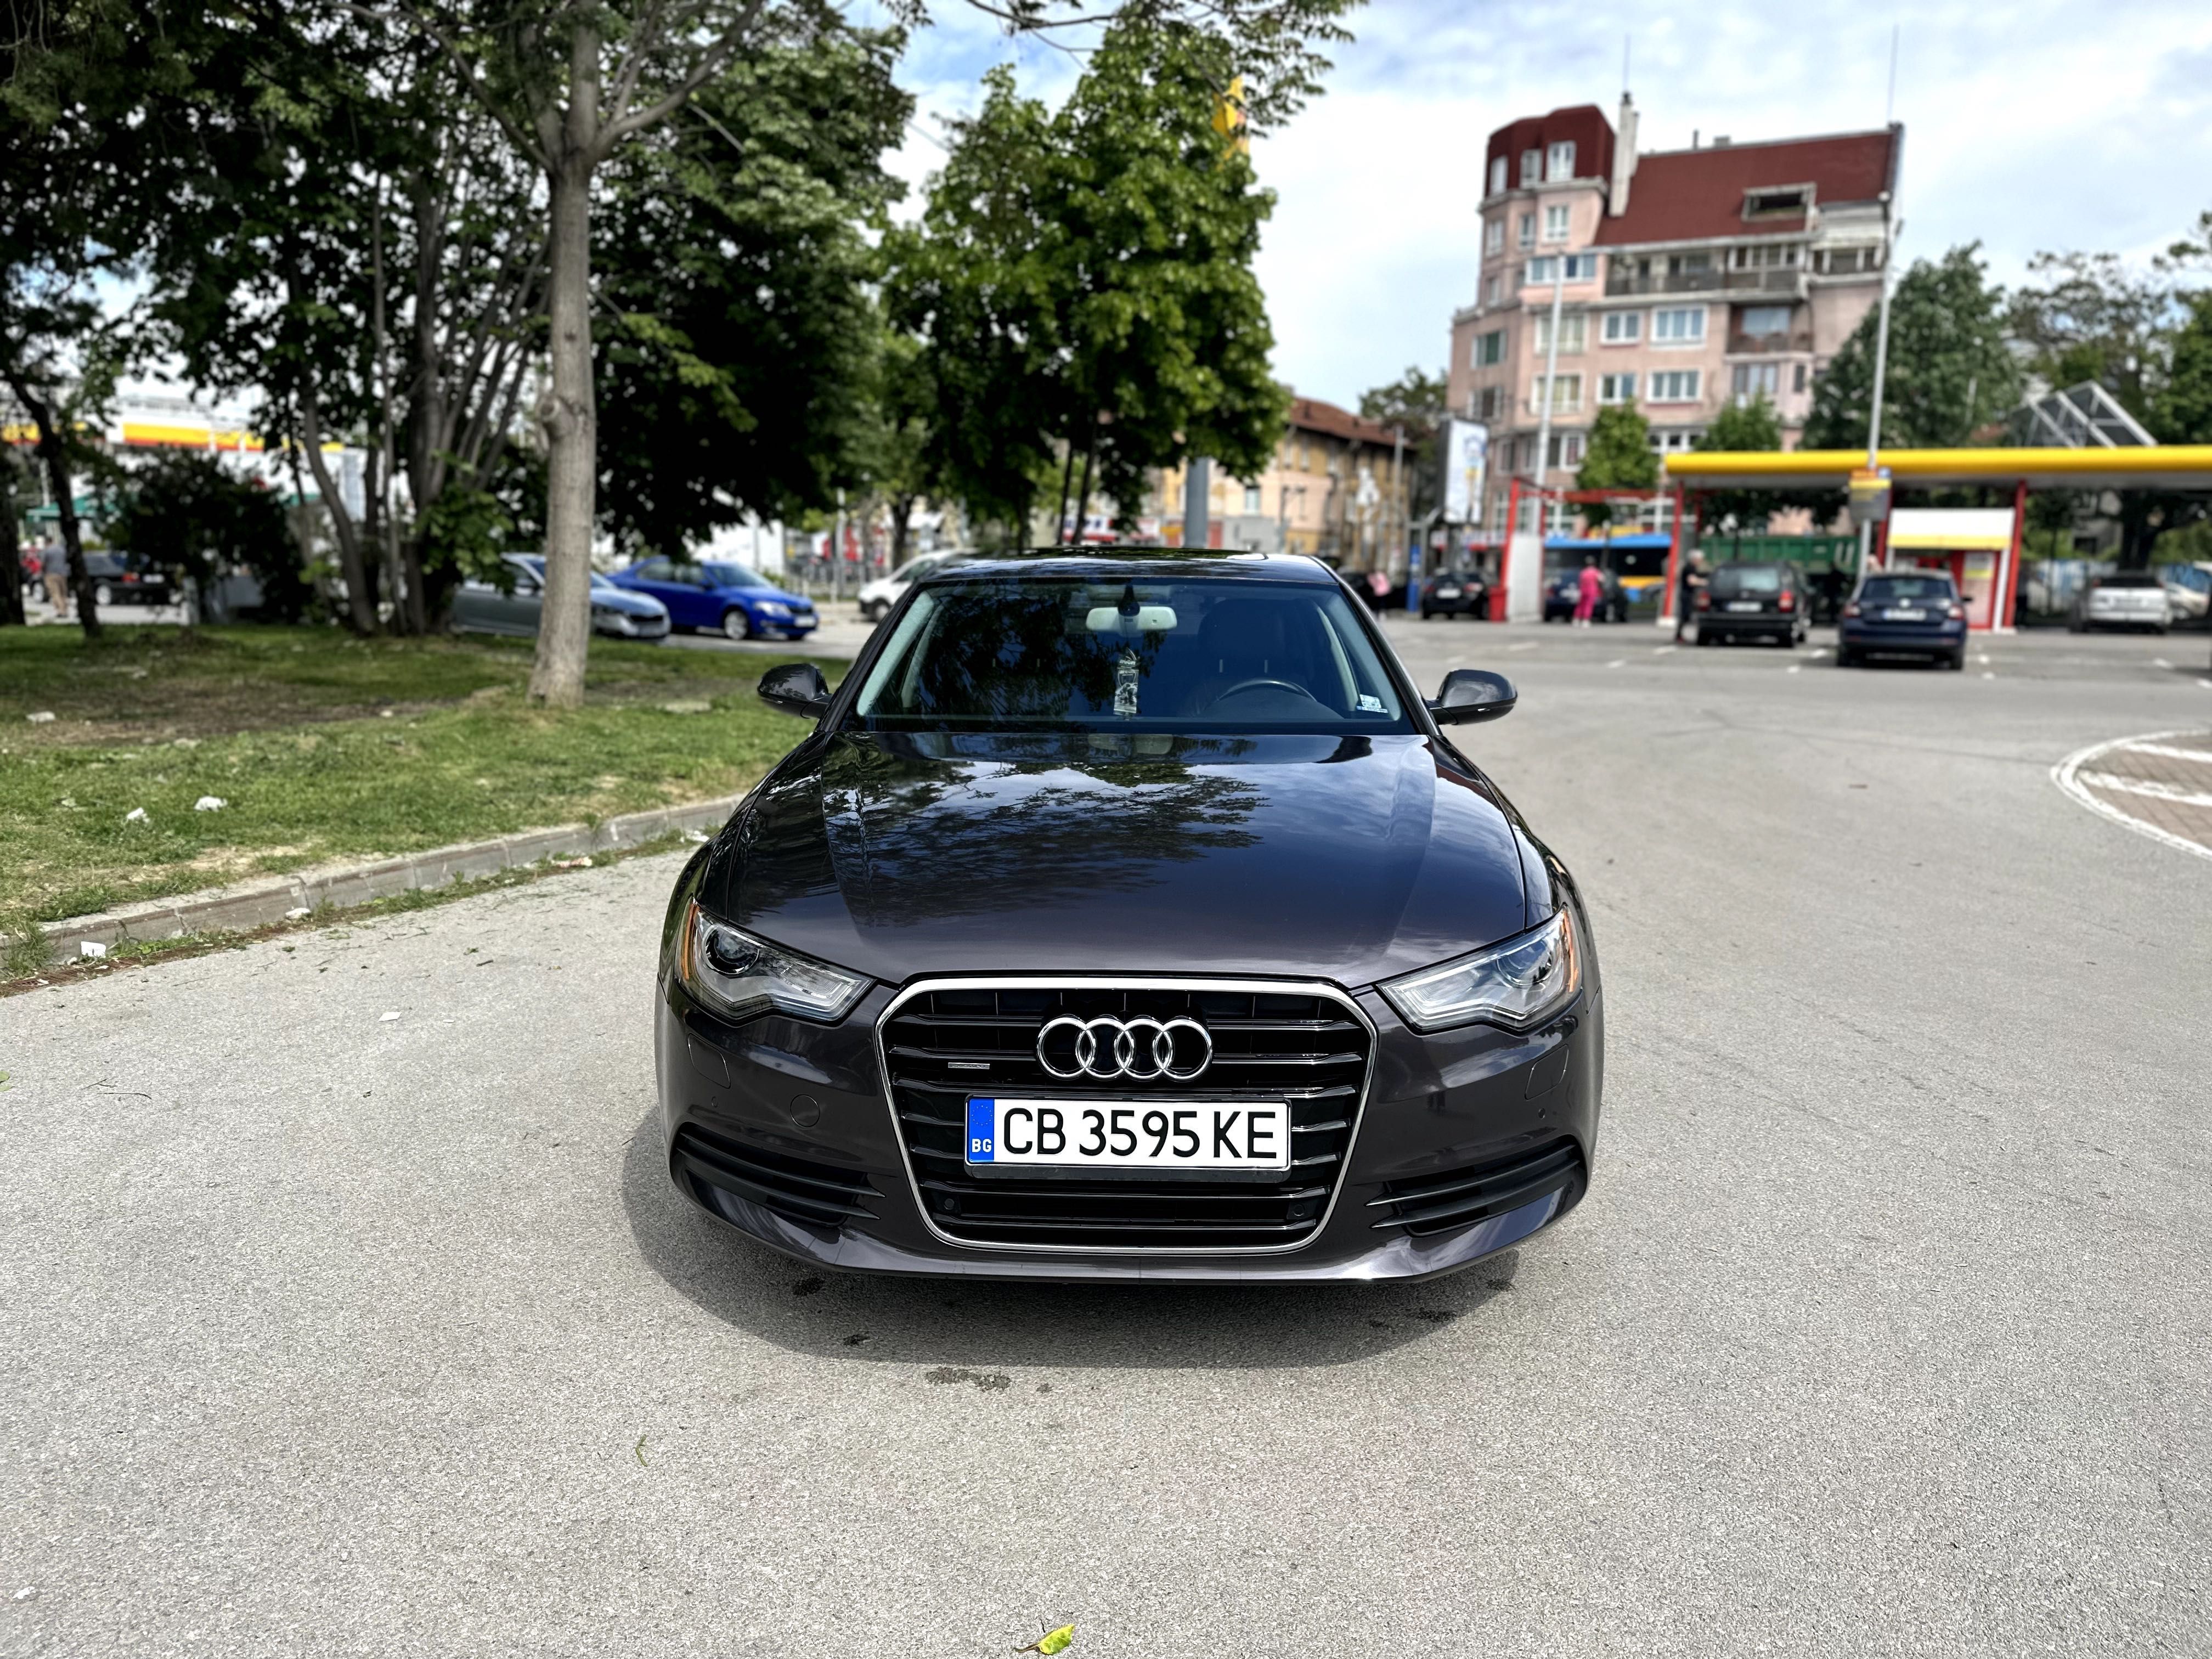 Audi A6 3.0 TFSI - Premium Plus, ZF8 (Bitcoin)